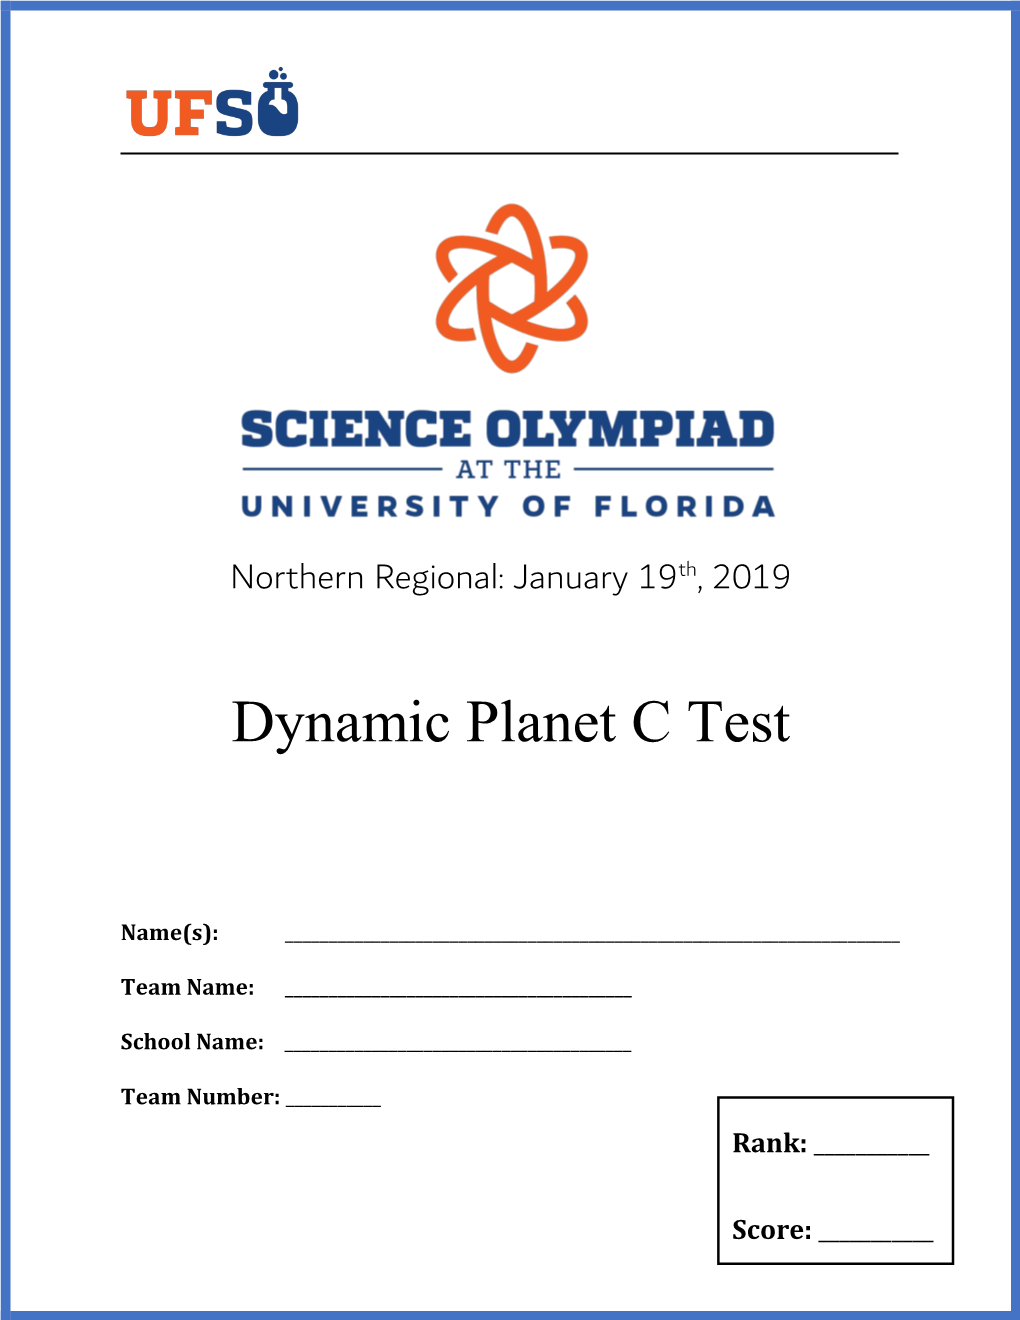 Dynamic Planet C Test